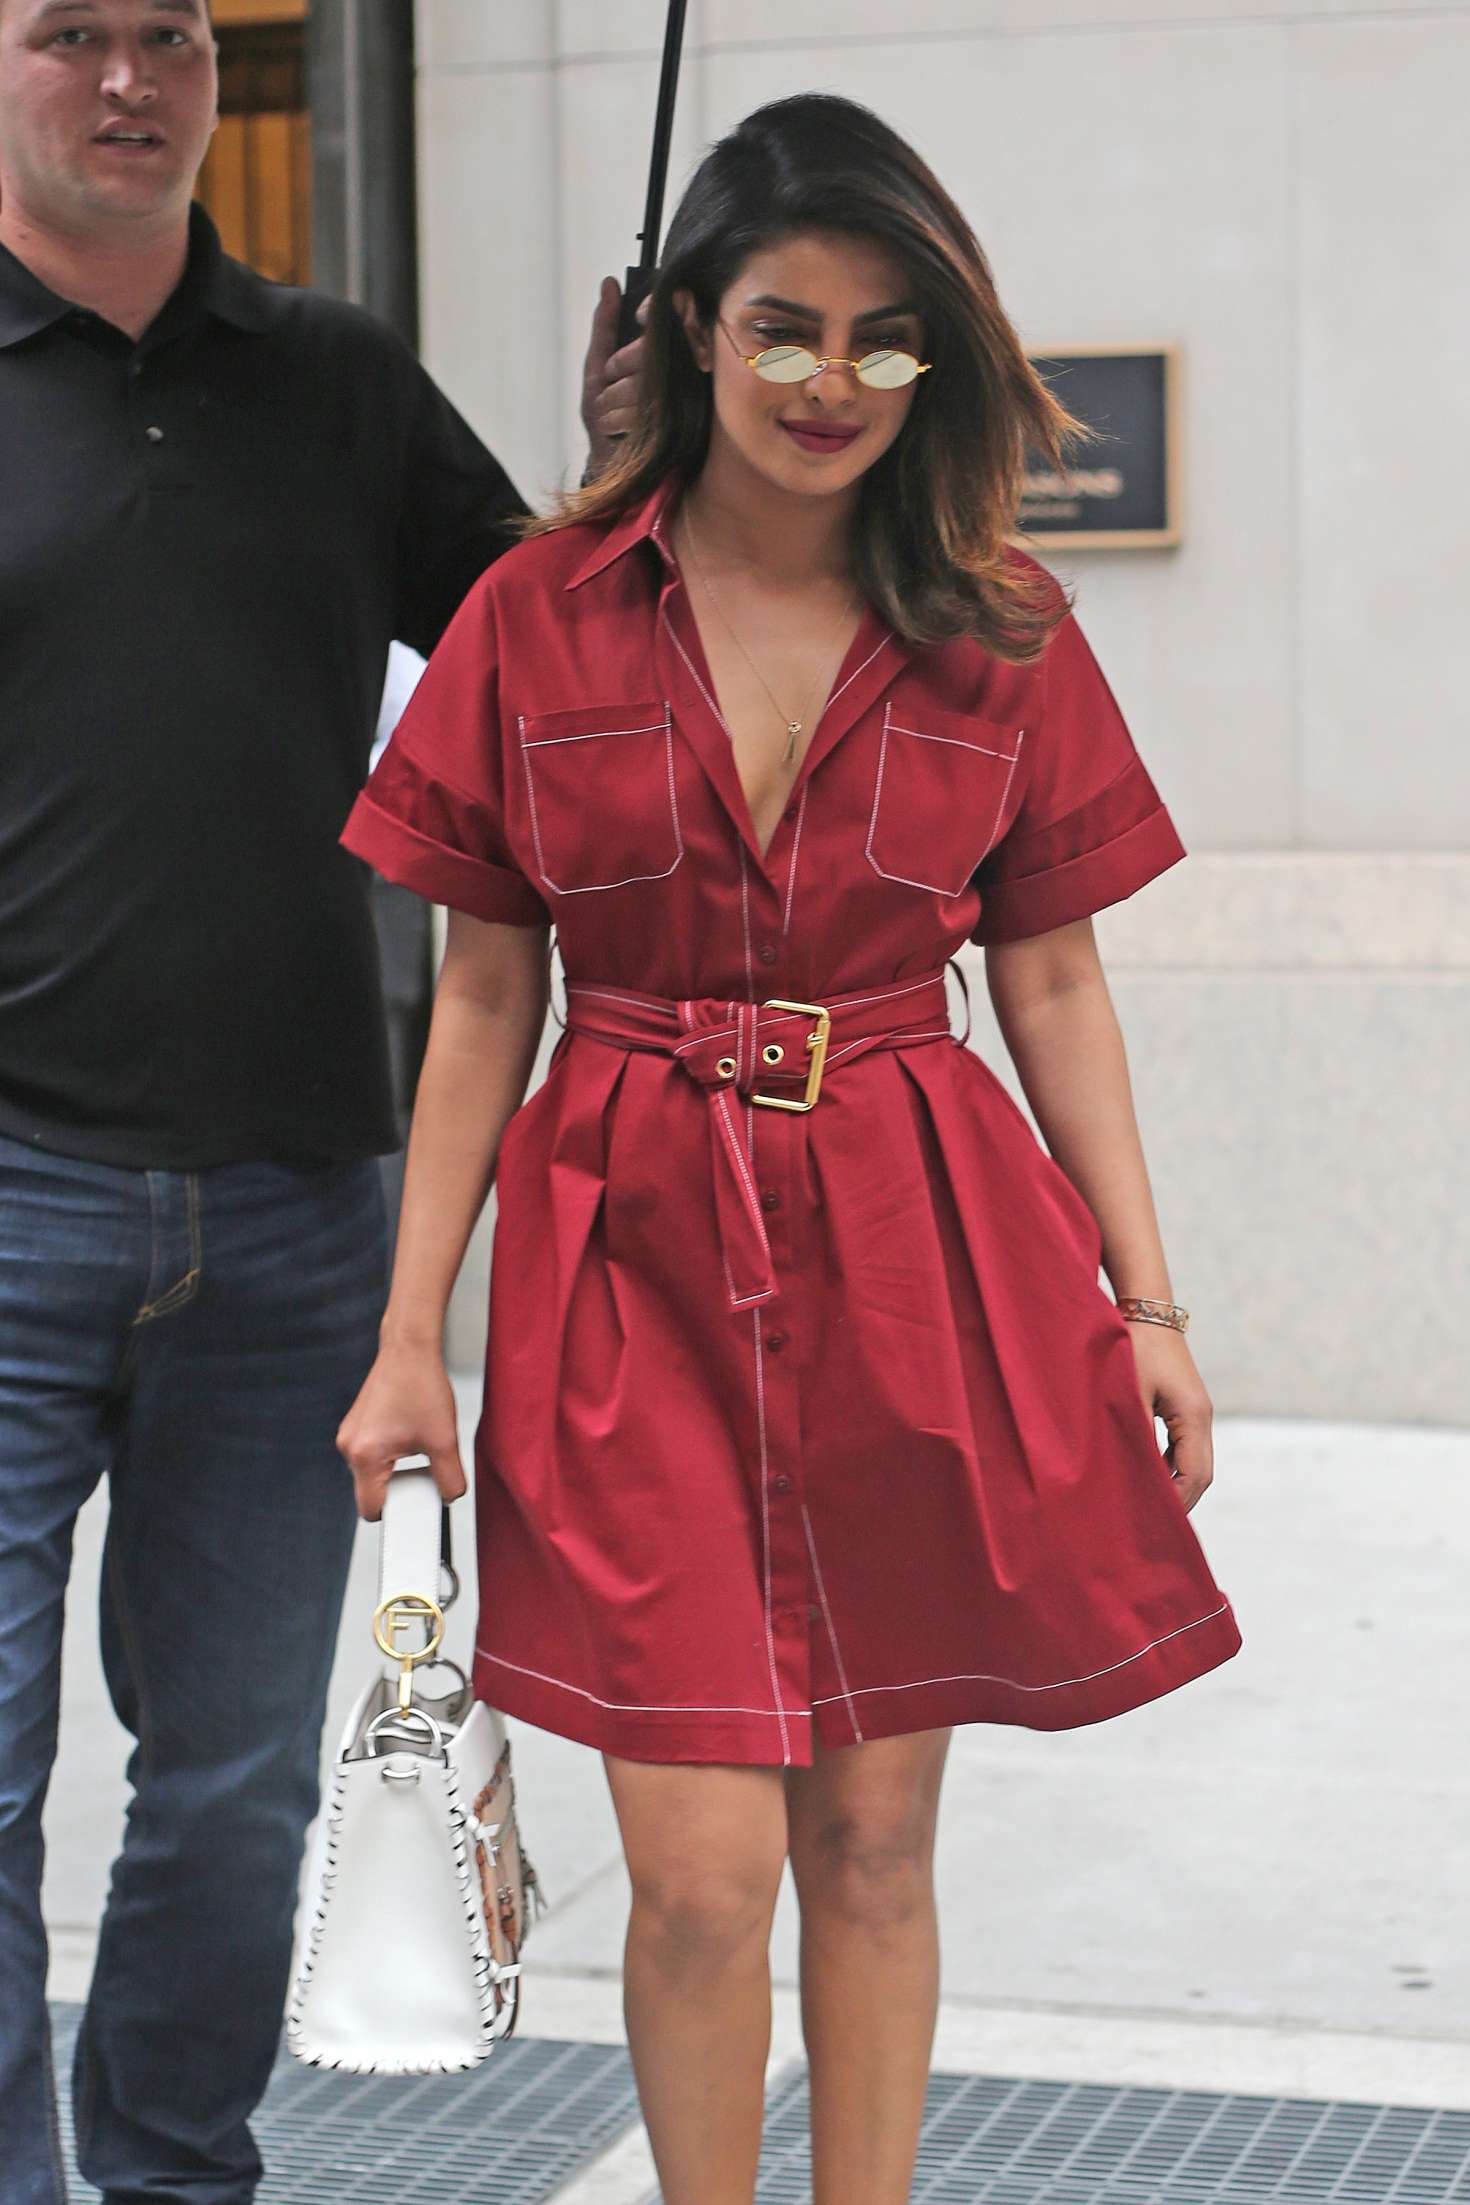 Priyanka Chopra in Red Dress â€“ Leaves her apartment in New York City